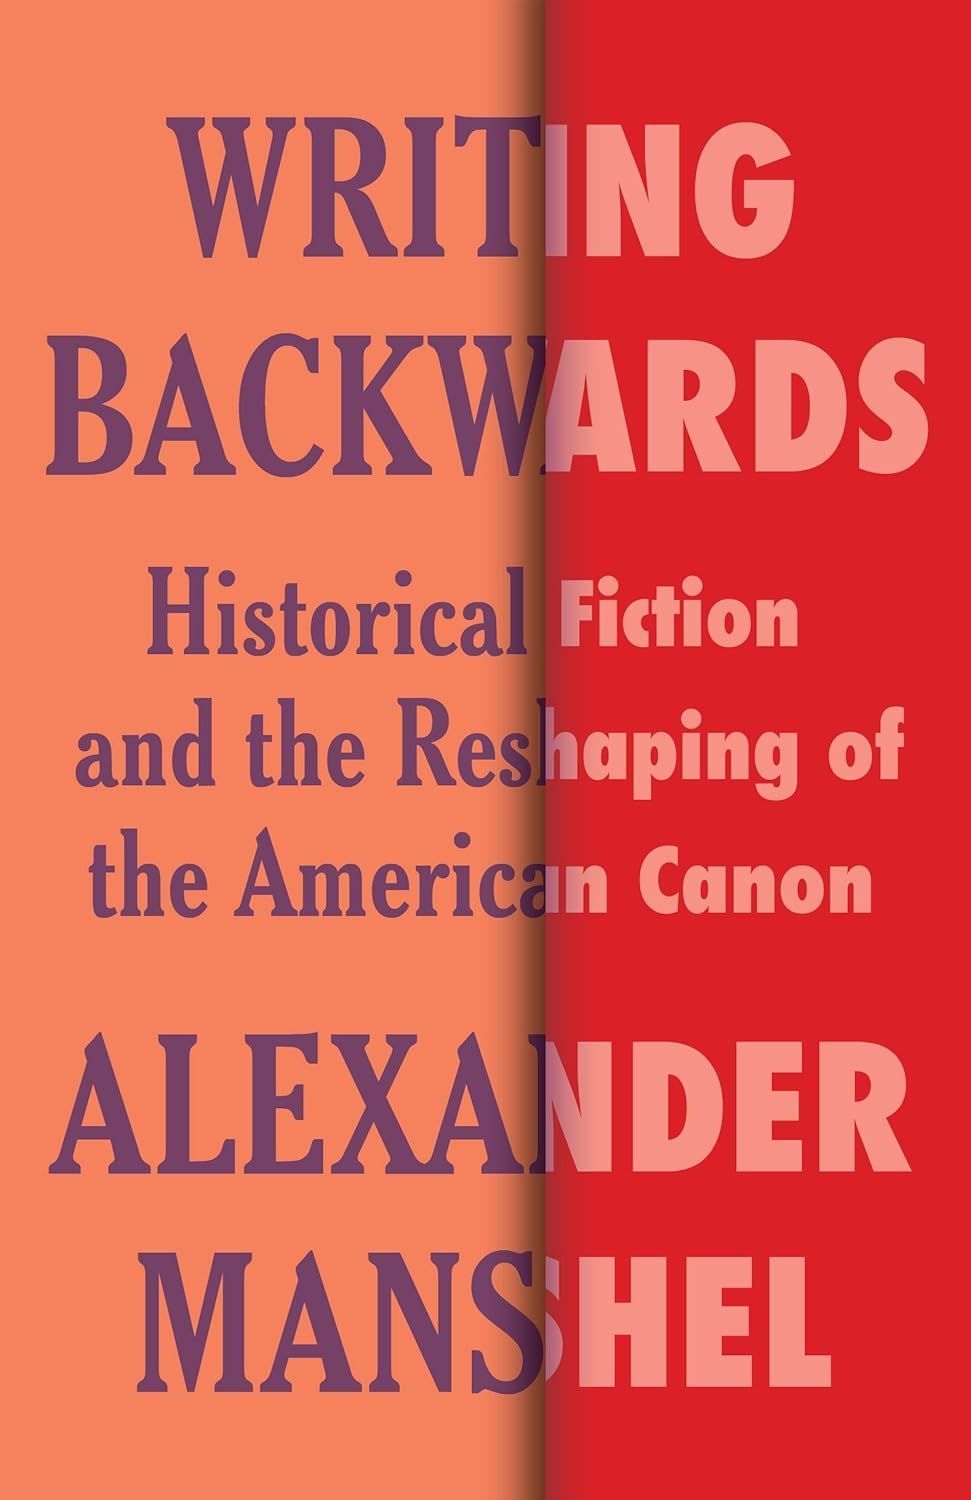 Rewriting (and Righting) History: On Alexander Manshel’s “Writing Backwards”